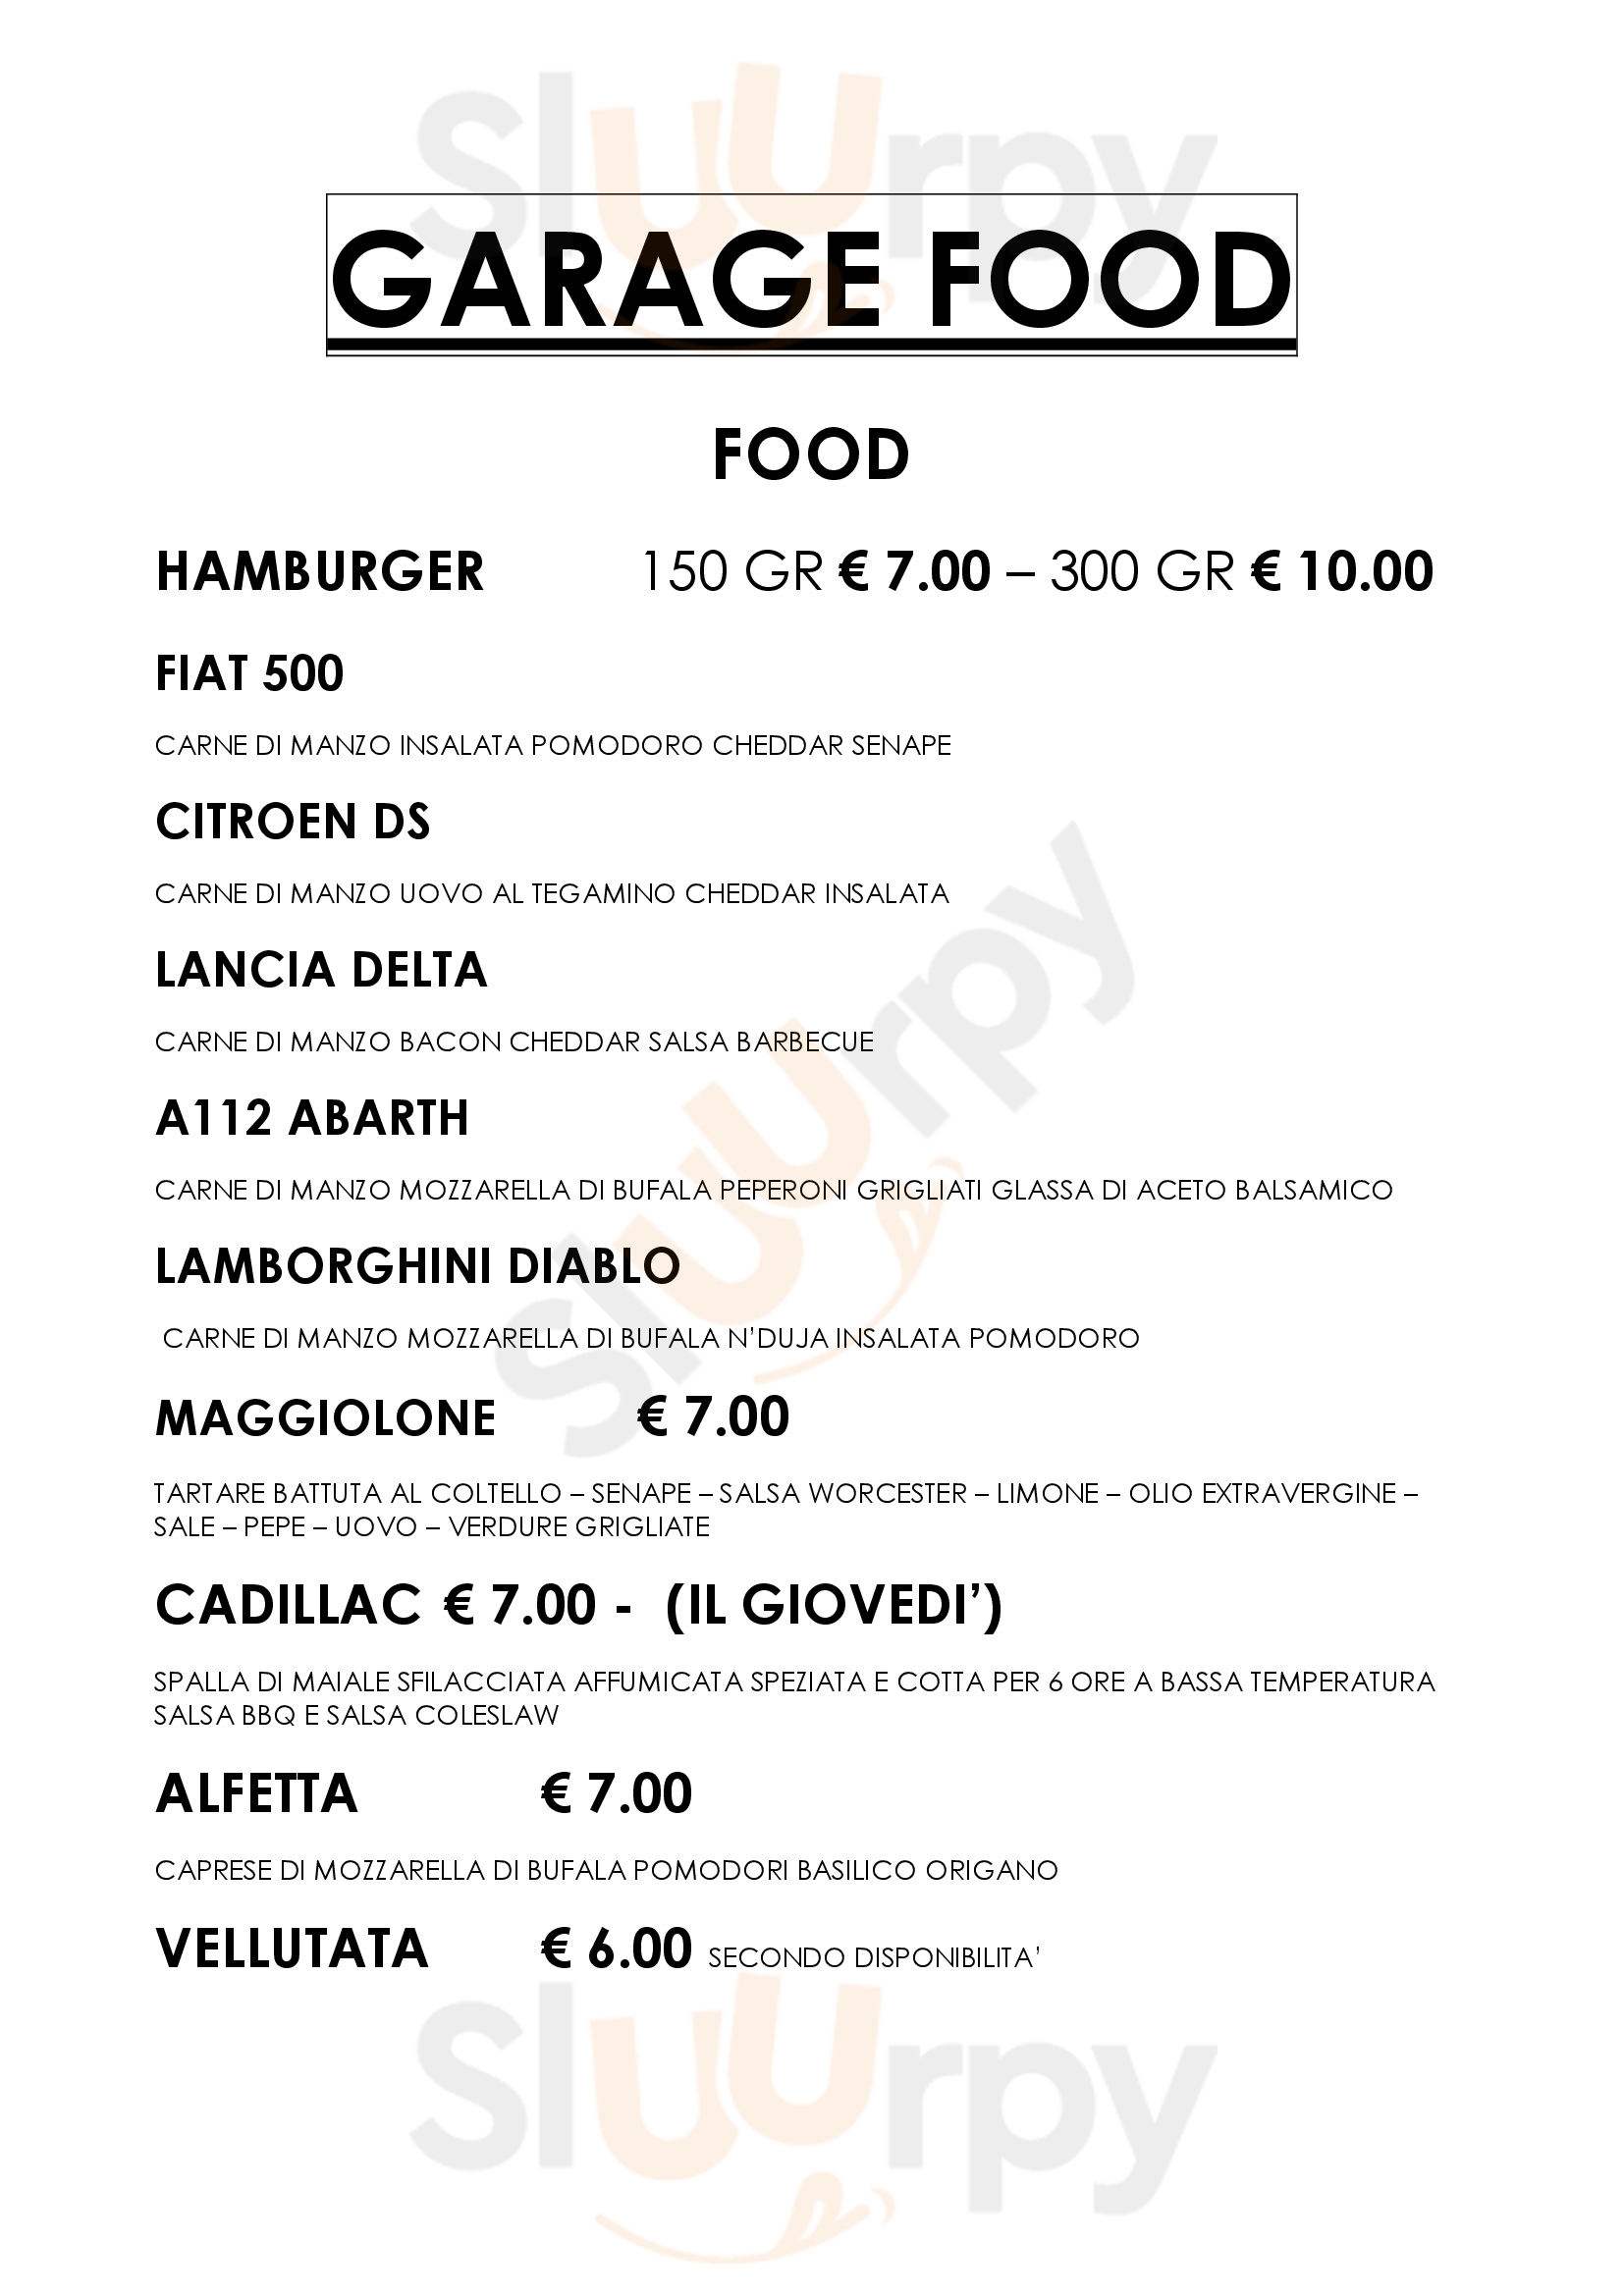 Garage Food Ciserano menù 1 pagina